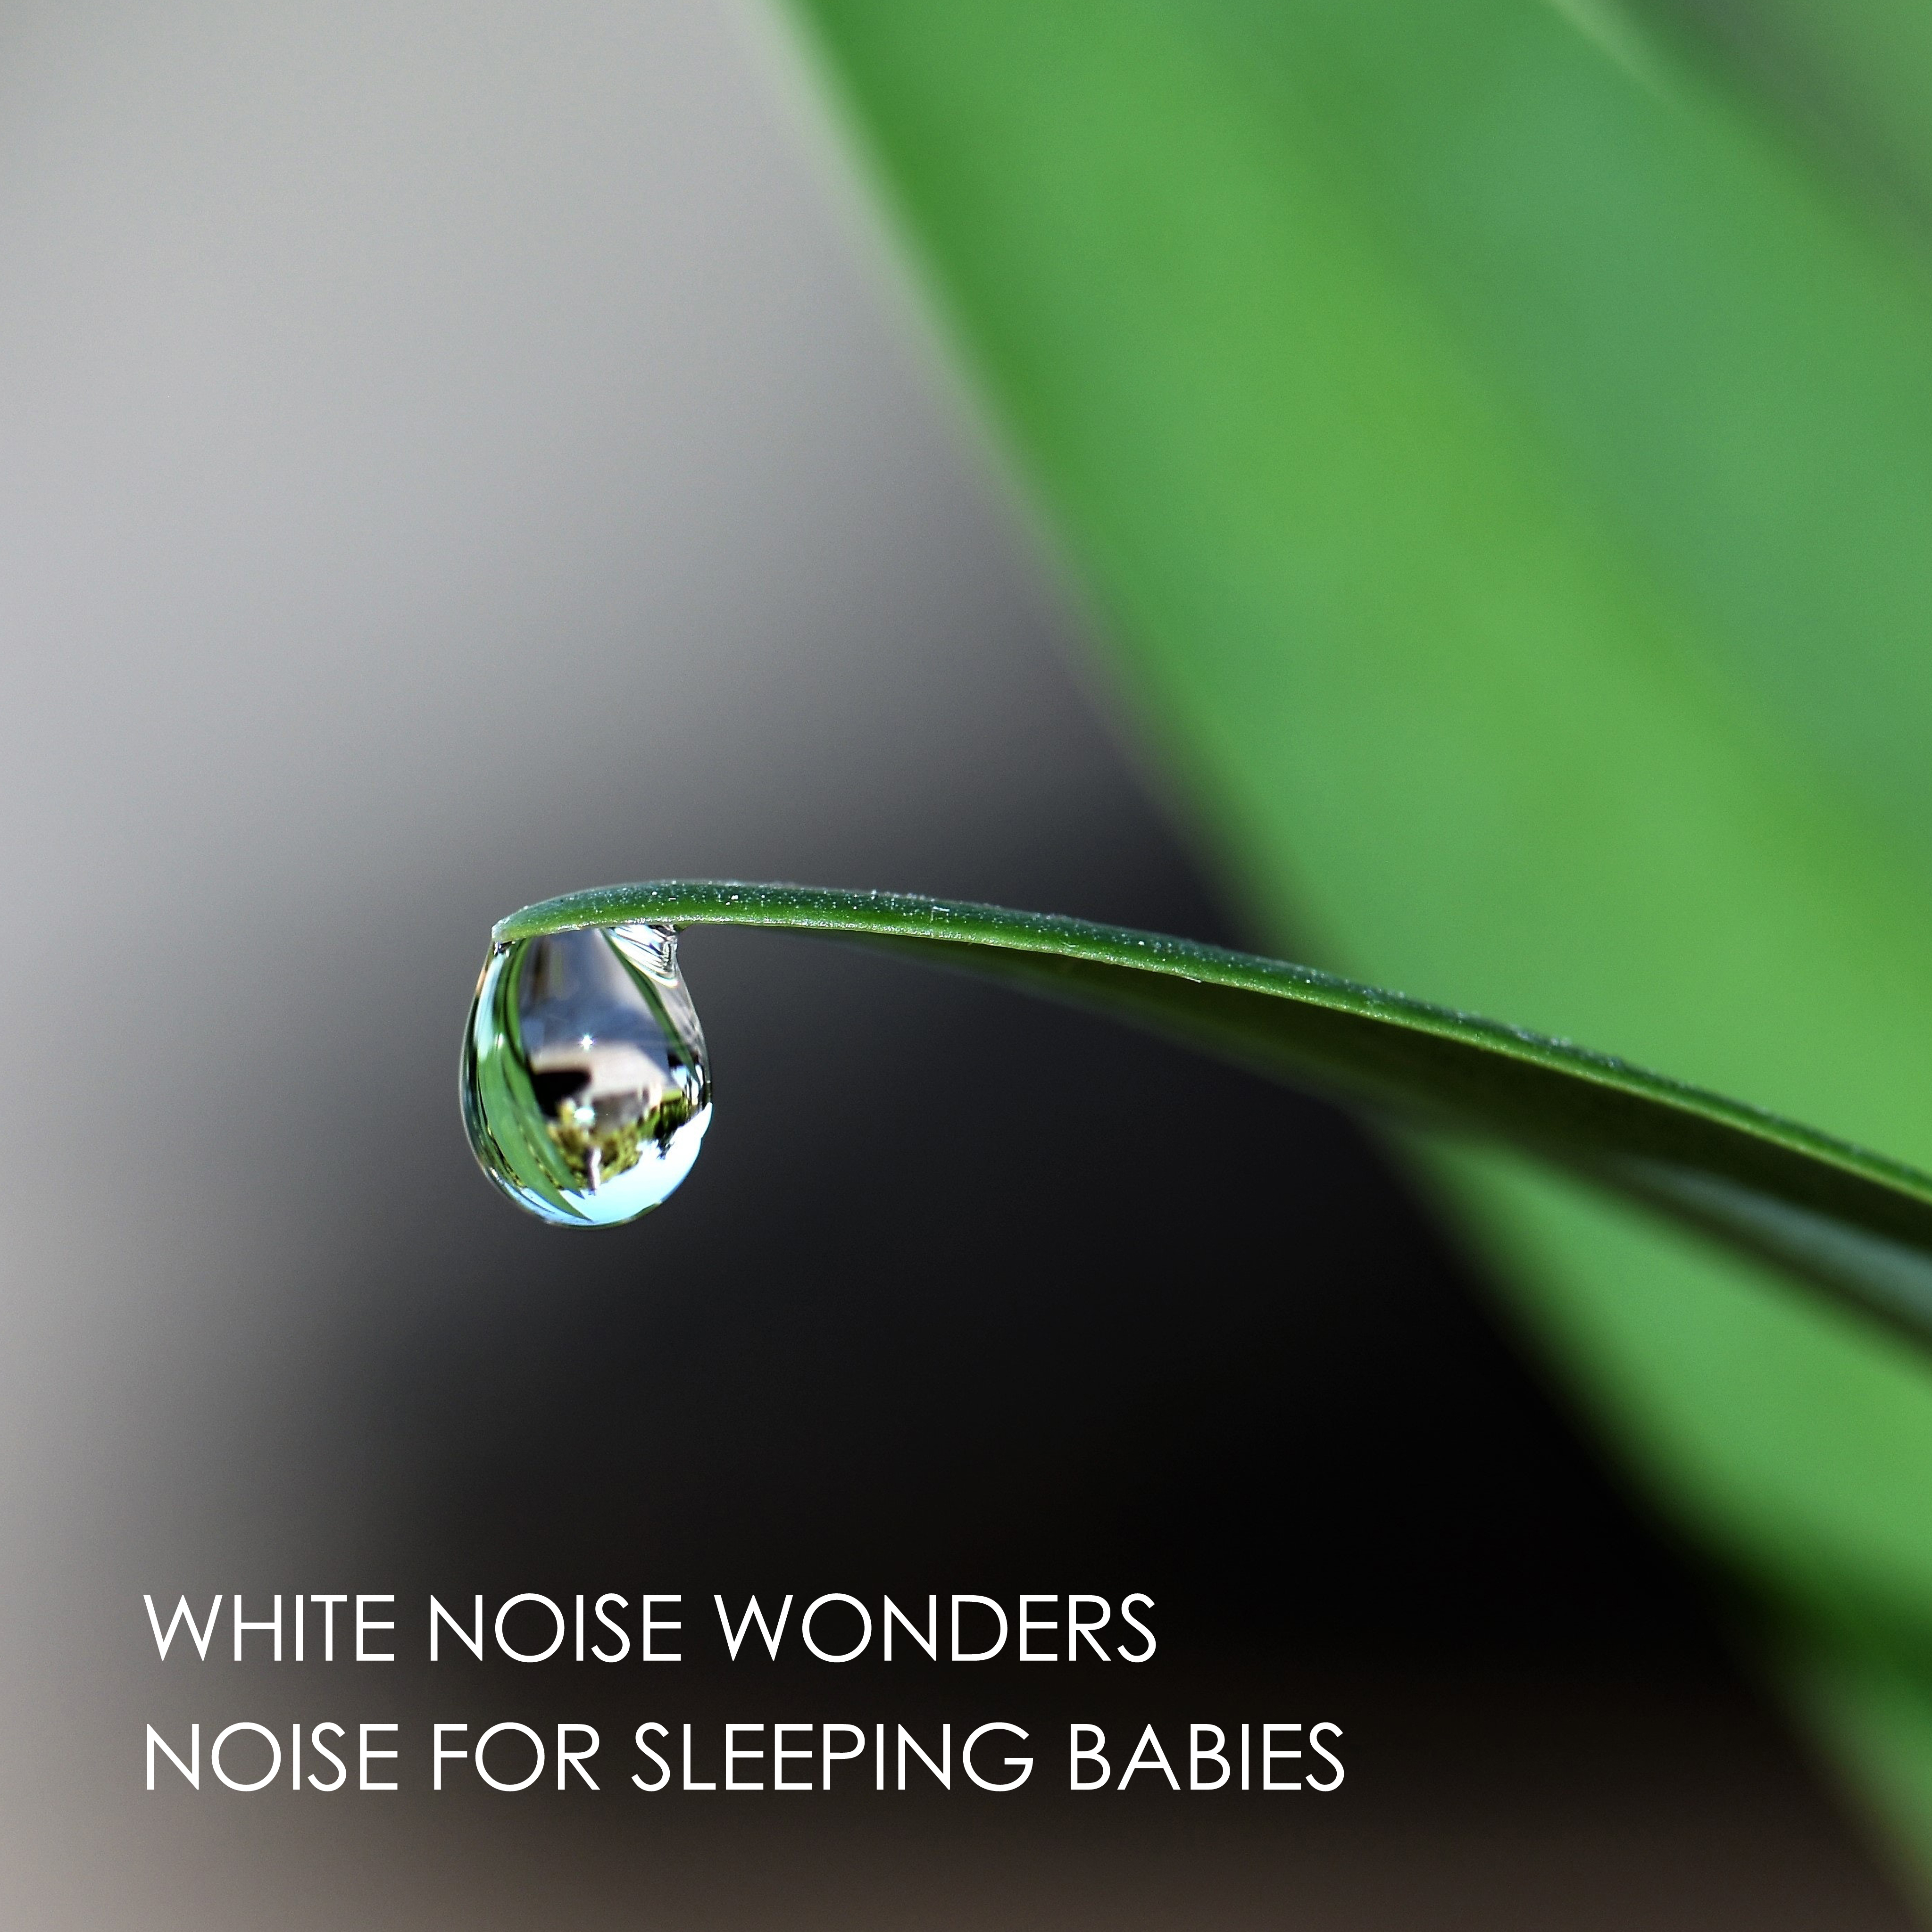 18 White Noise Wonders - Noise for Sleeping Babies